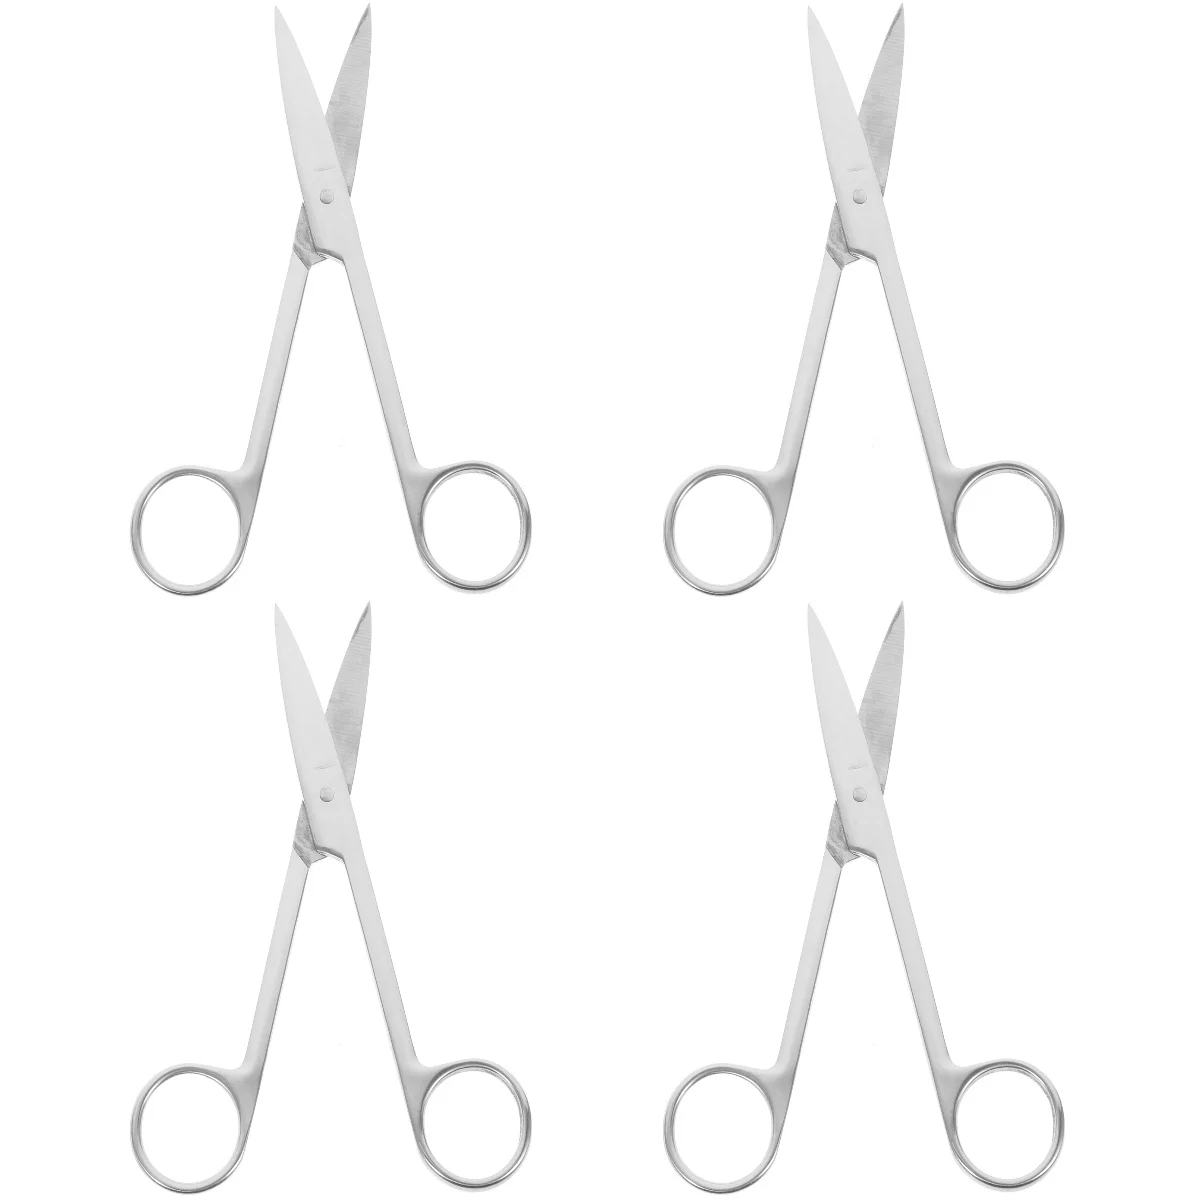 

64 CM Pleurotomo Medico Medical Scissors Hair Stainless Steel Dissection